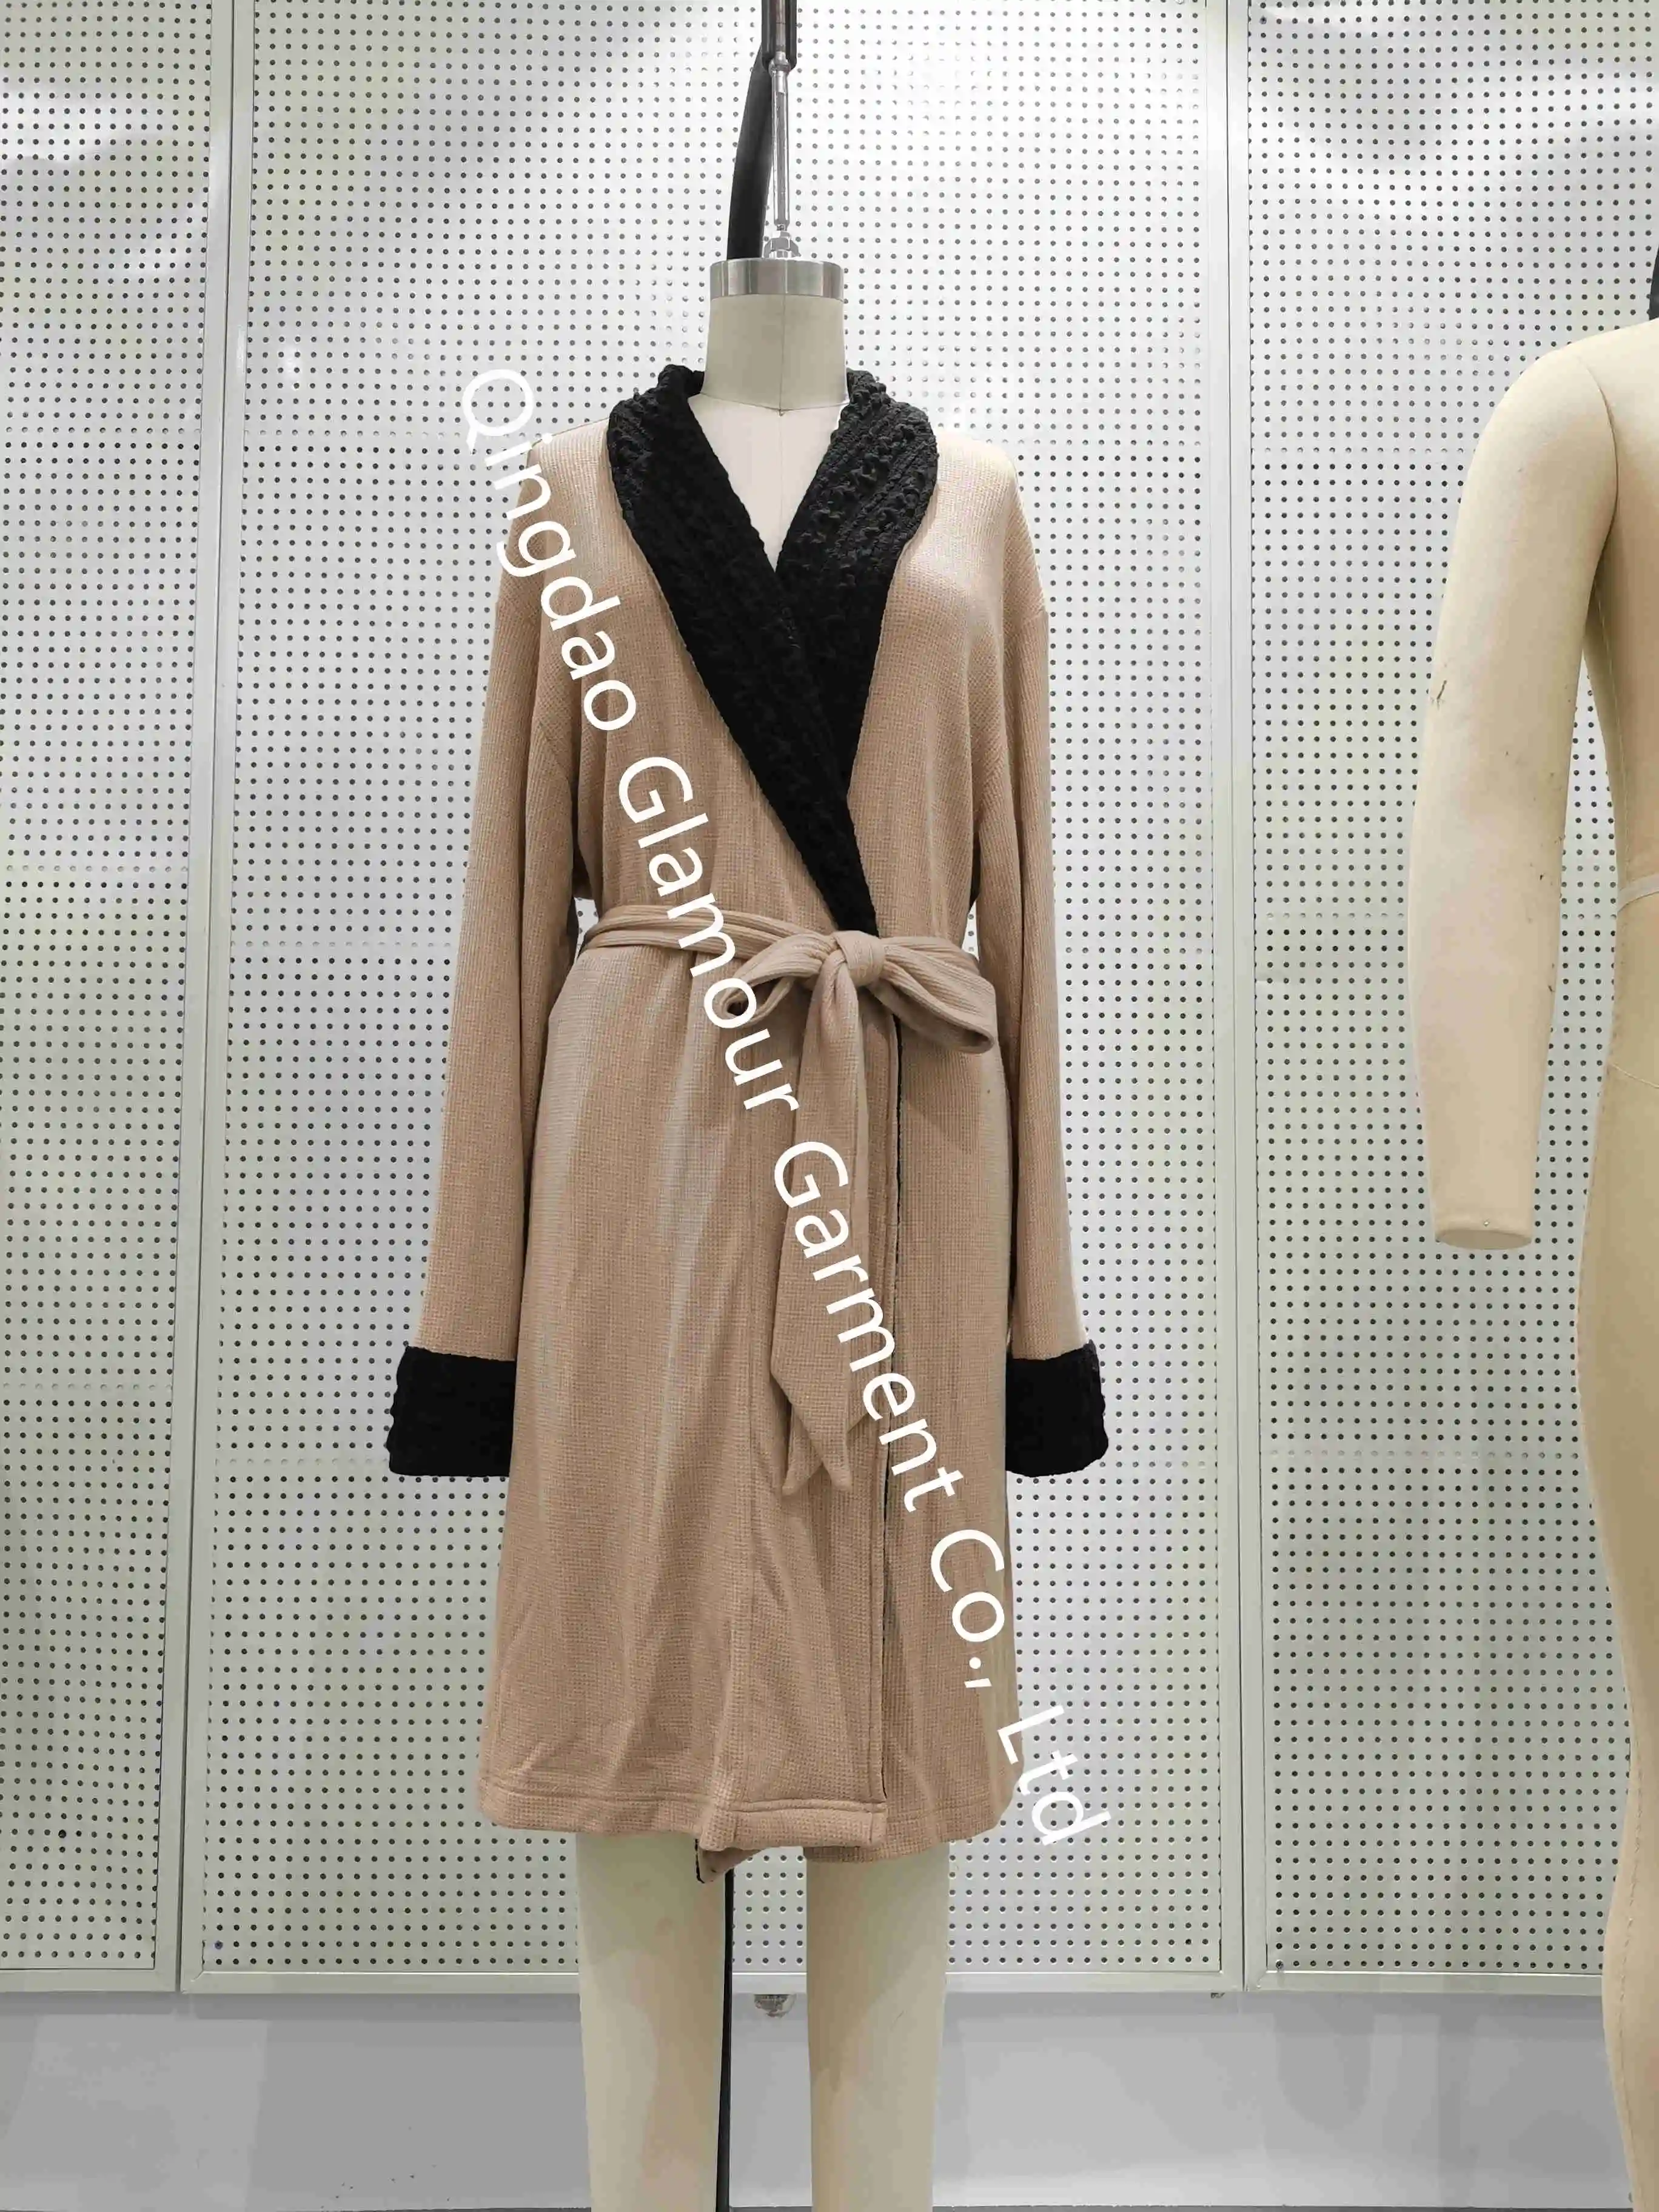 Unisex Men Women's Sleepwear Bathrobe Luxury Bamboo Silk Robe Woman Spa ...